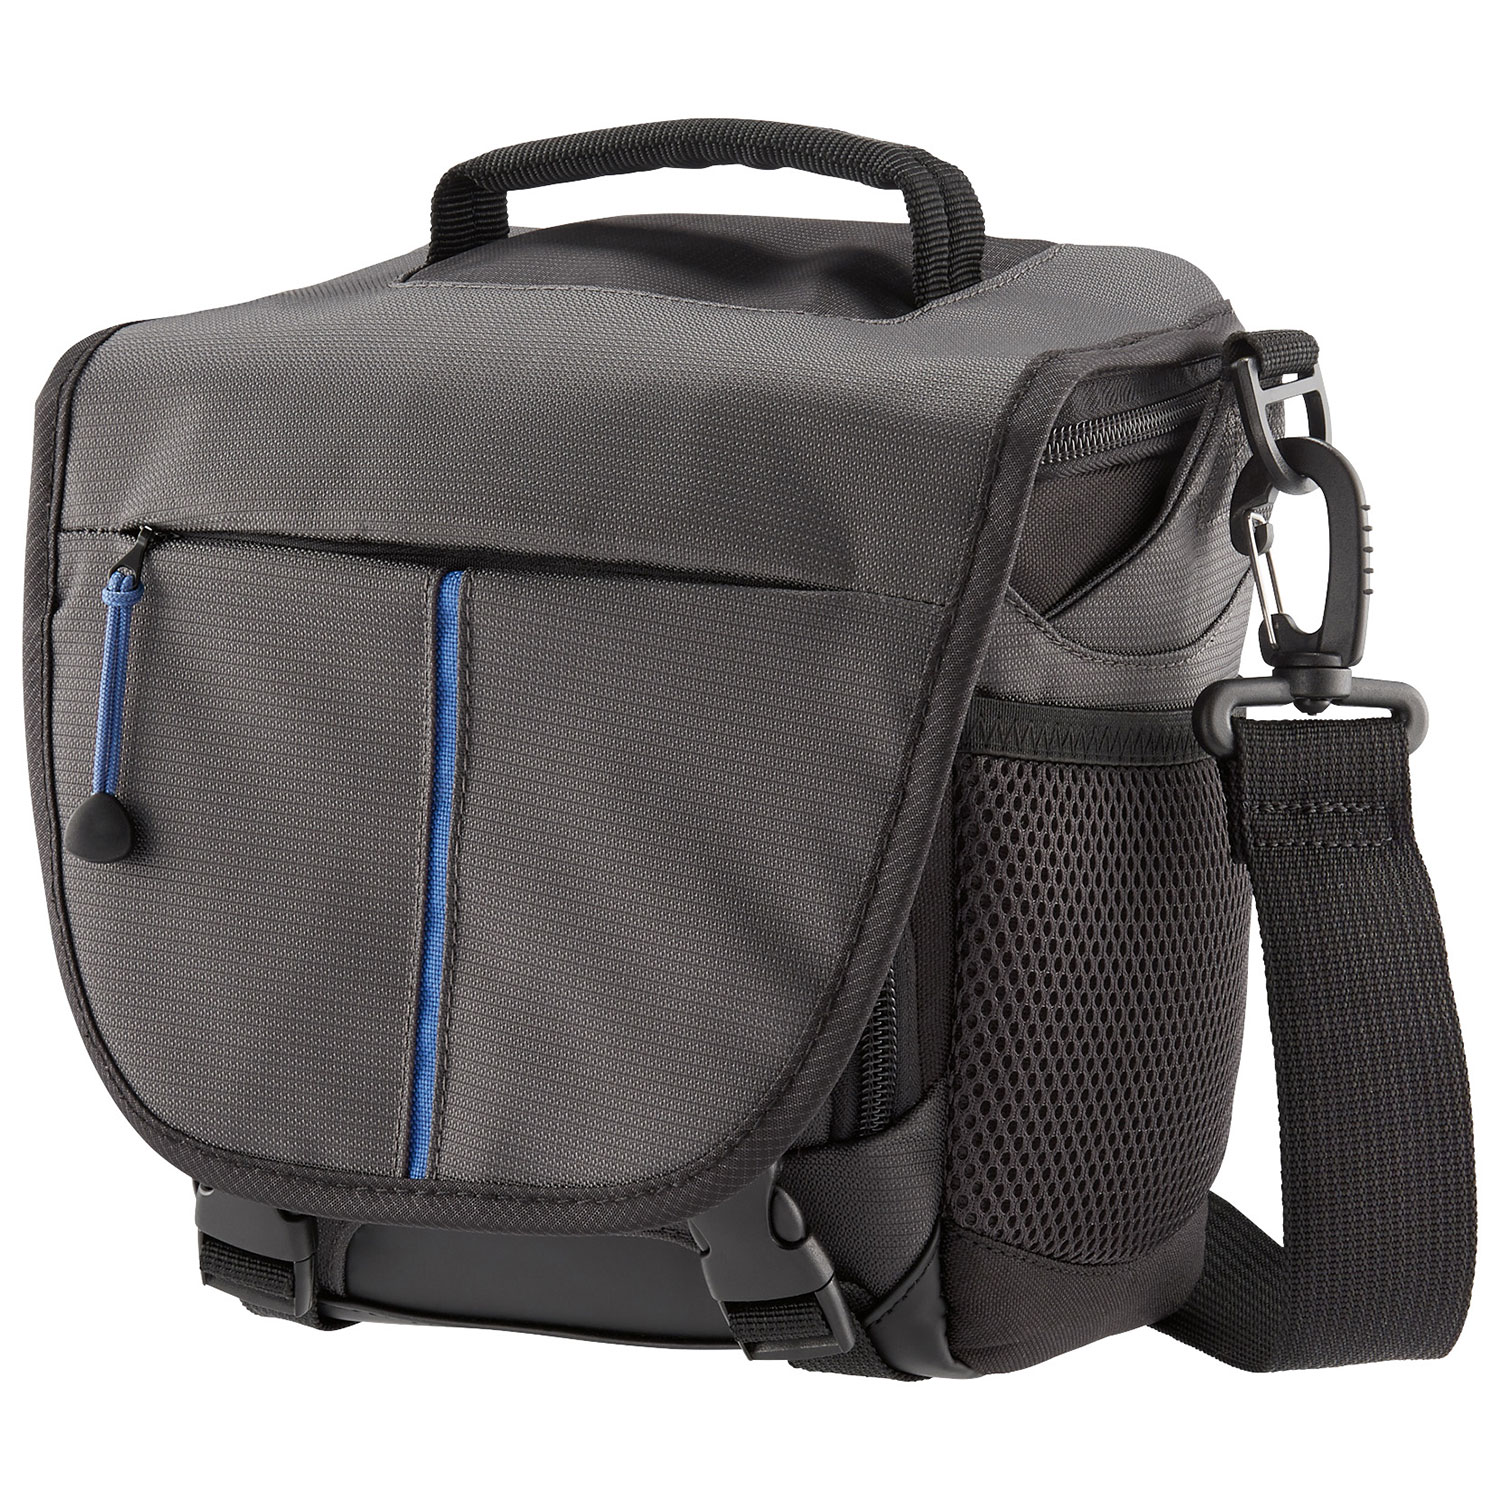 Insignia DSLR & Mirrorless Camera Shoulder Bag - Medium - Grey - Only at Best Buy